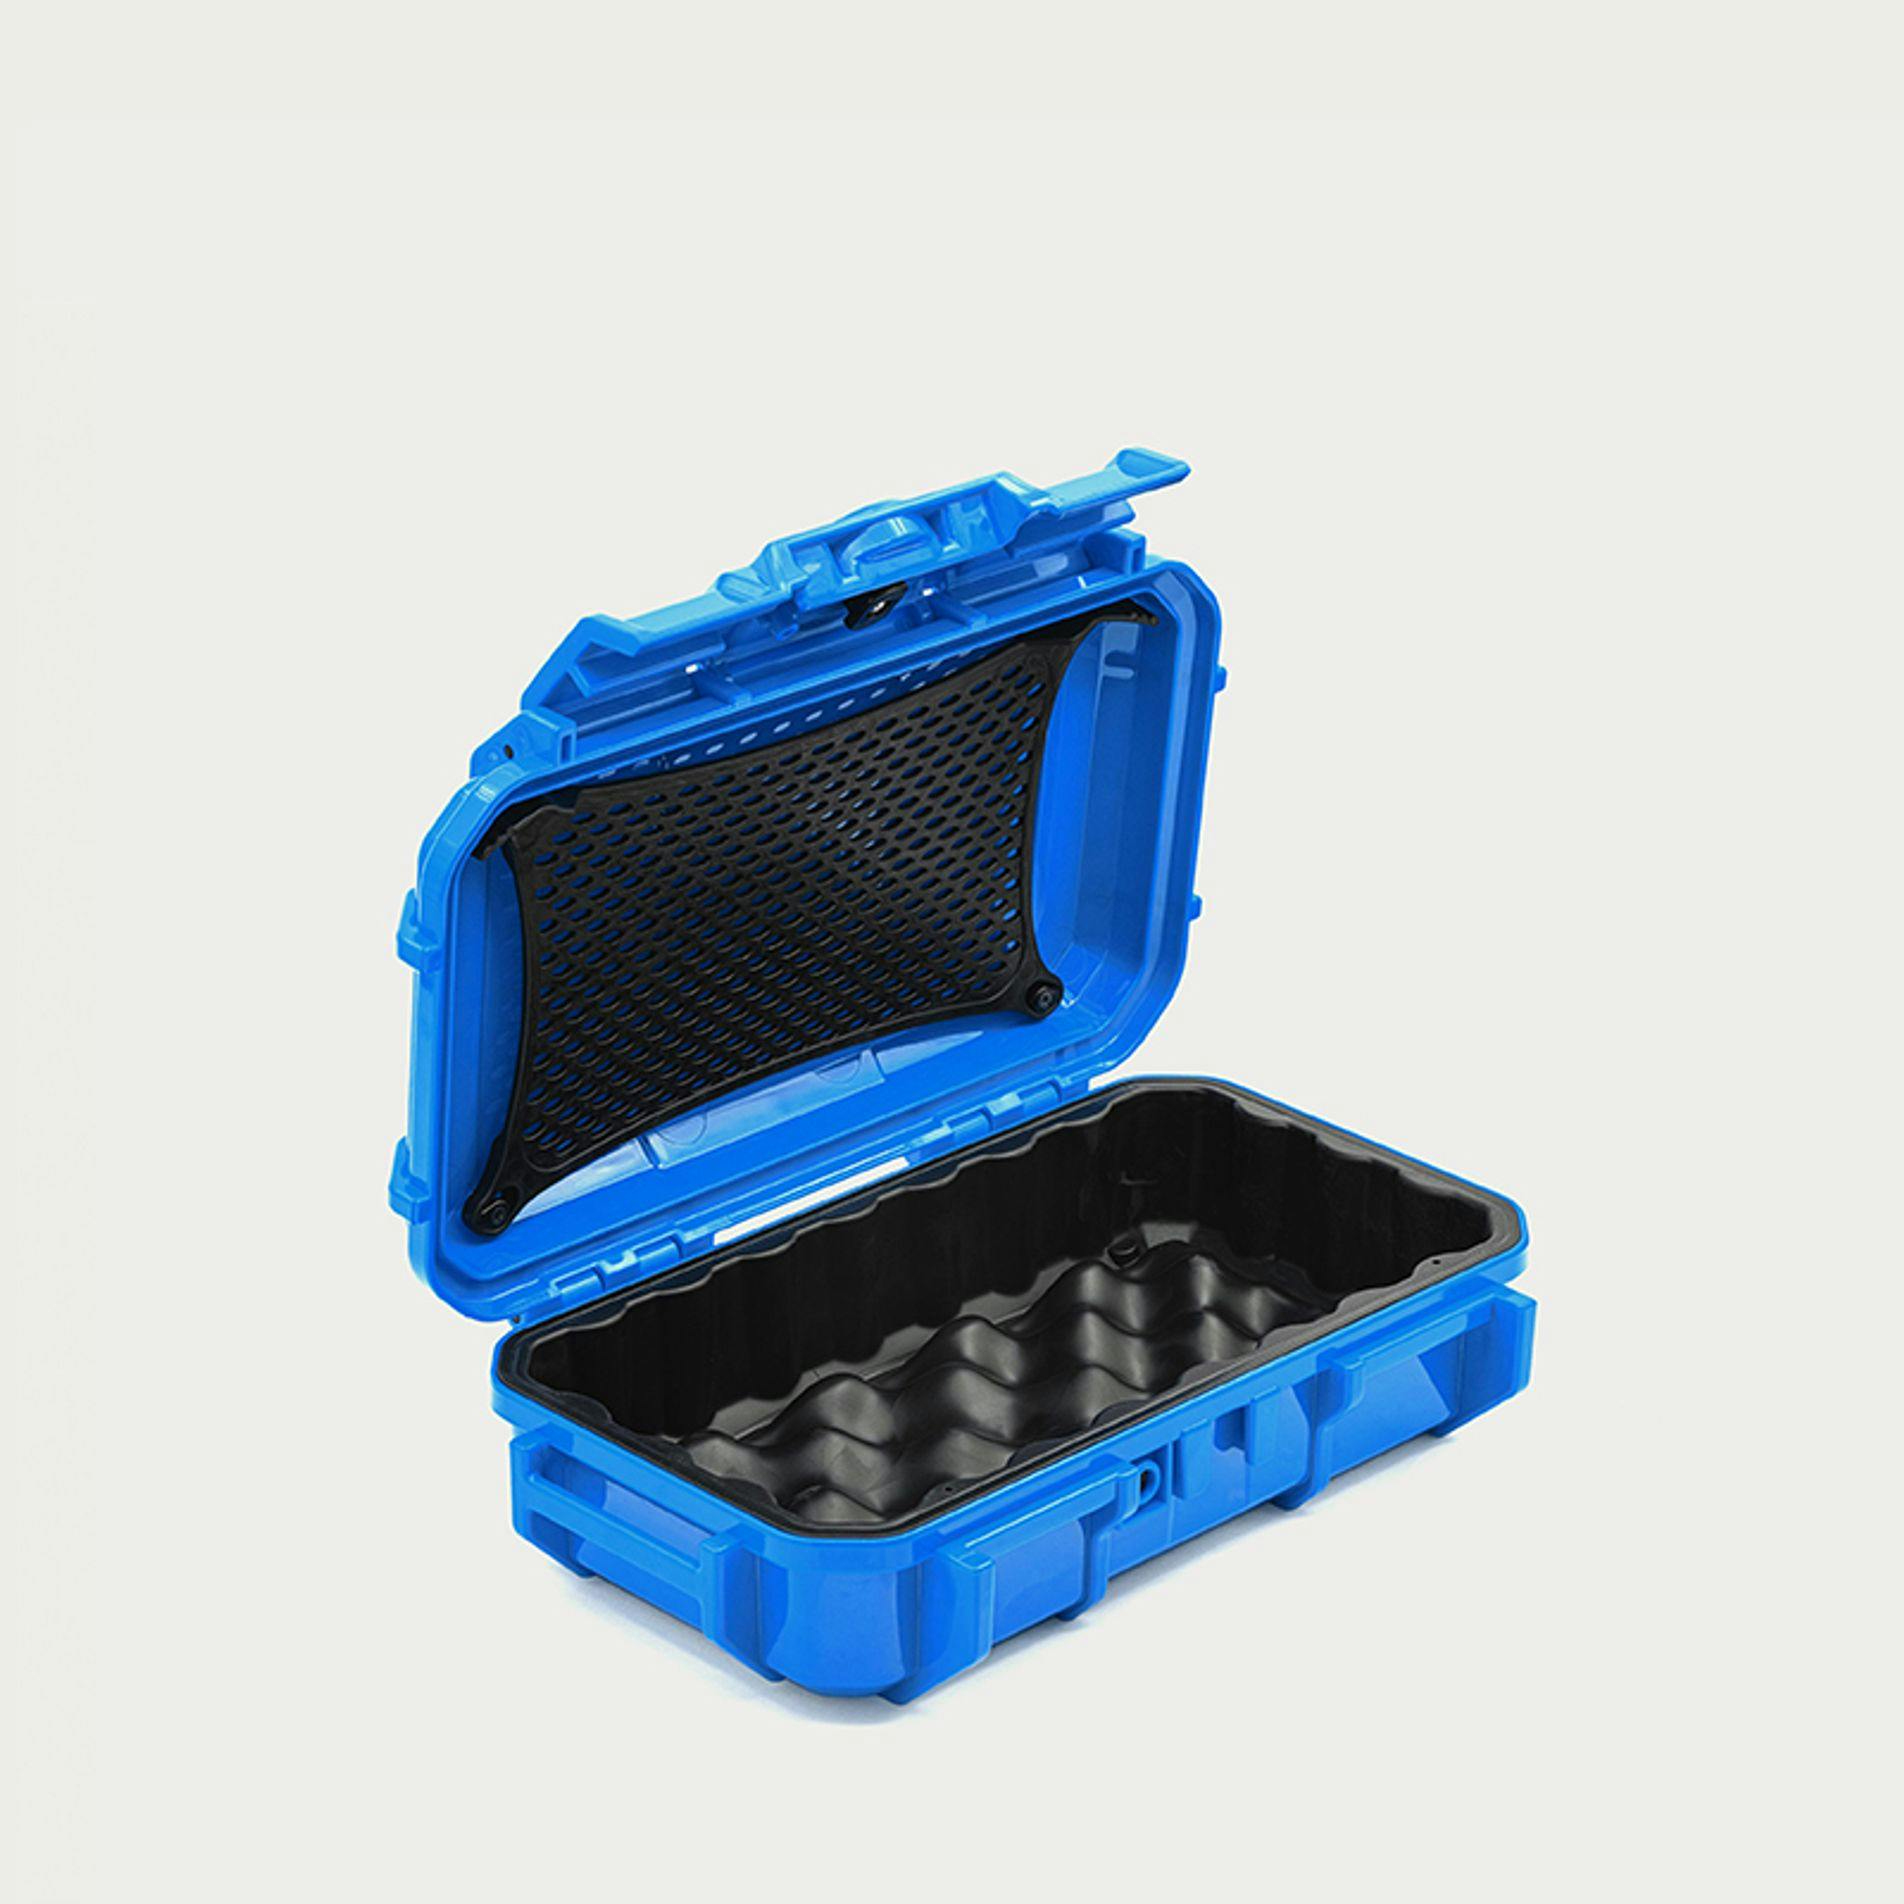 56 Micro Waterproof Camera Case w/ Rubber Insert - Black